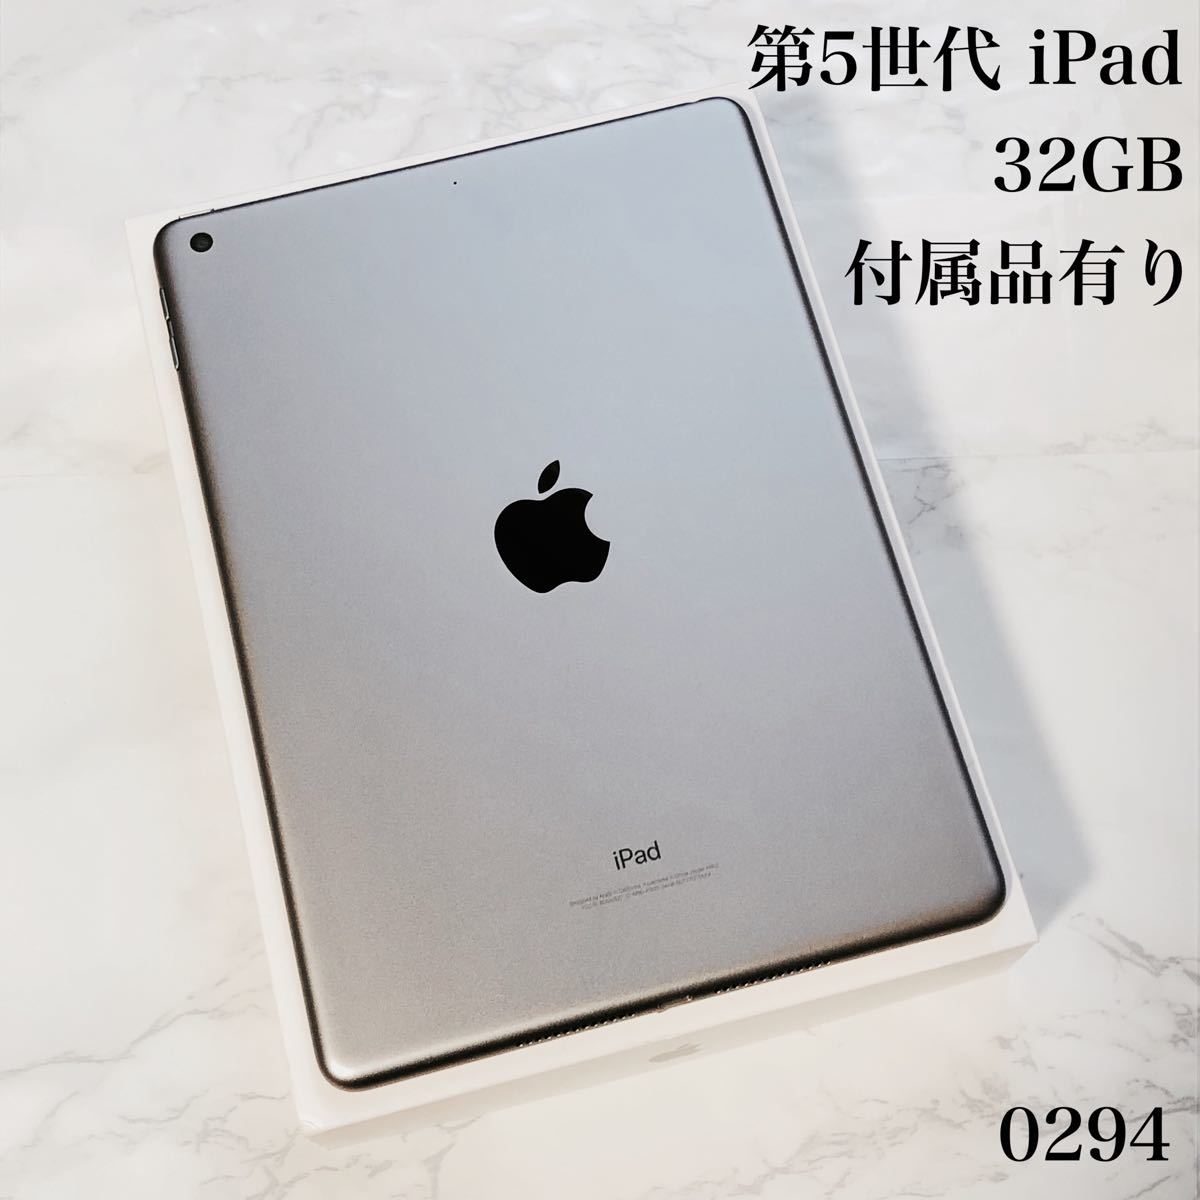 55%OFF!】 第5世代 iPad 32GB wifiモデル 管理番号 econet.bi